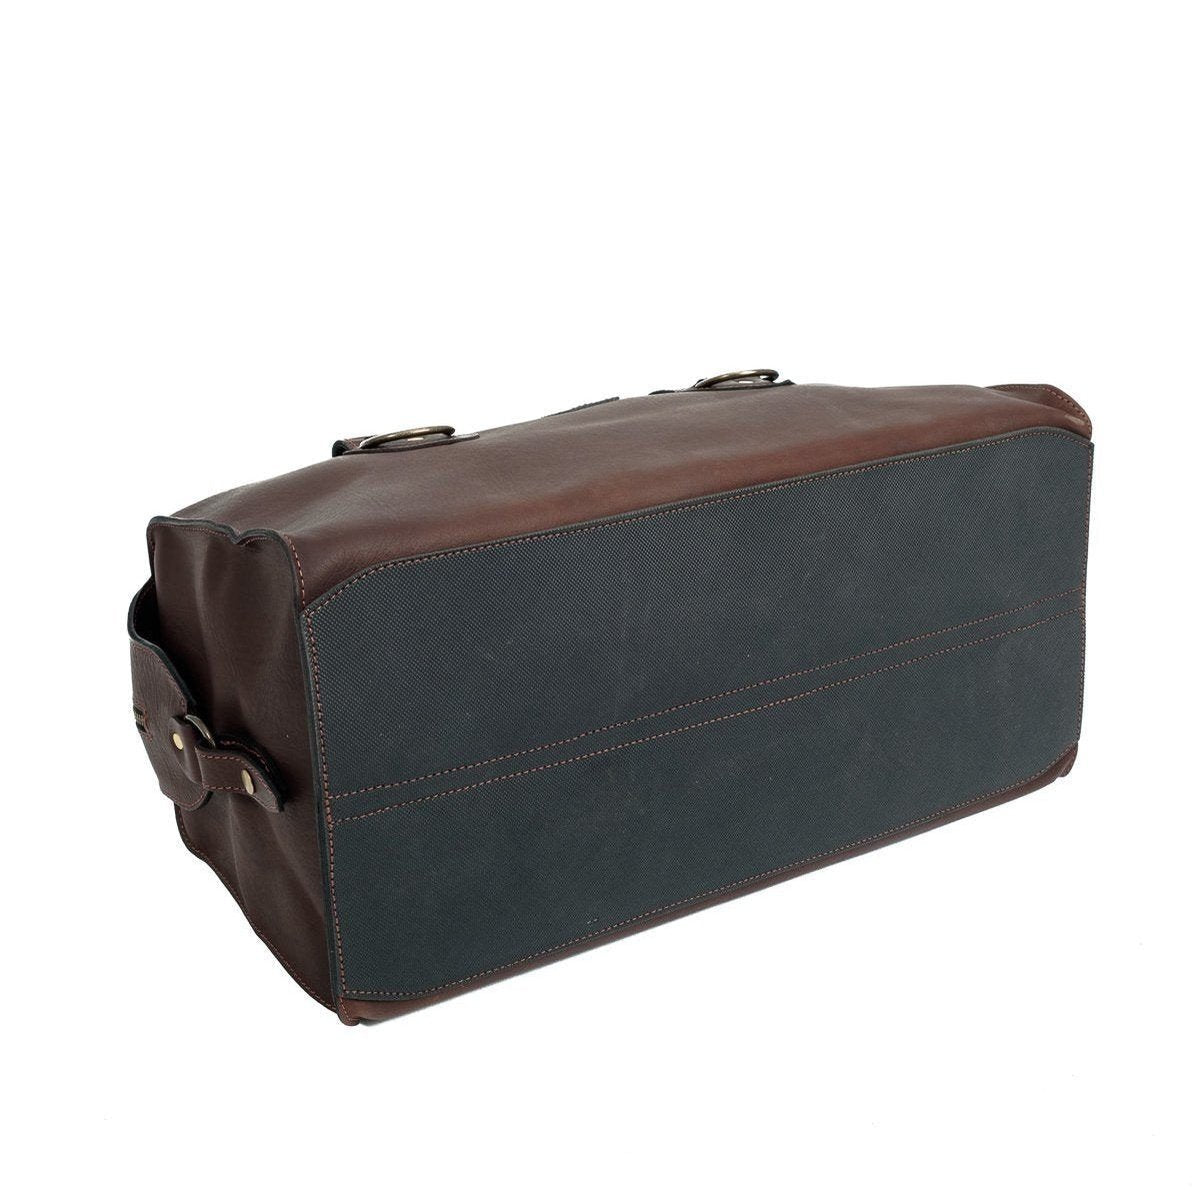 Overnighter Travel Bag - Aussie Bush Leather